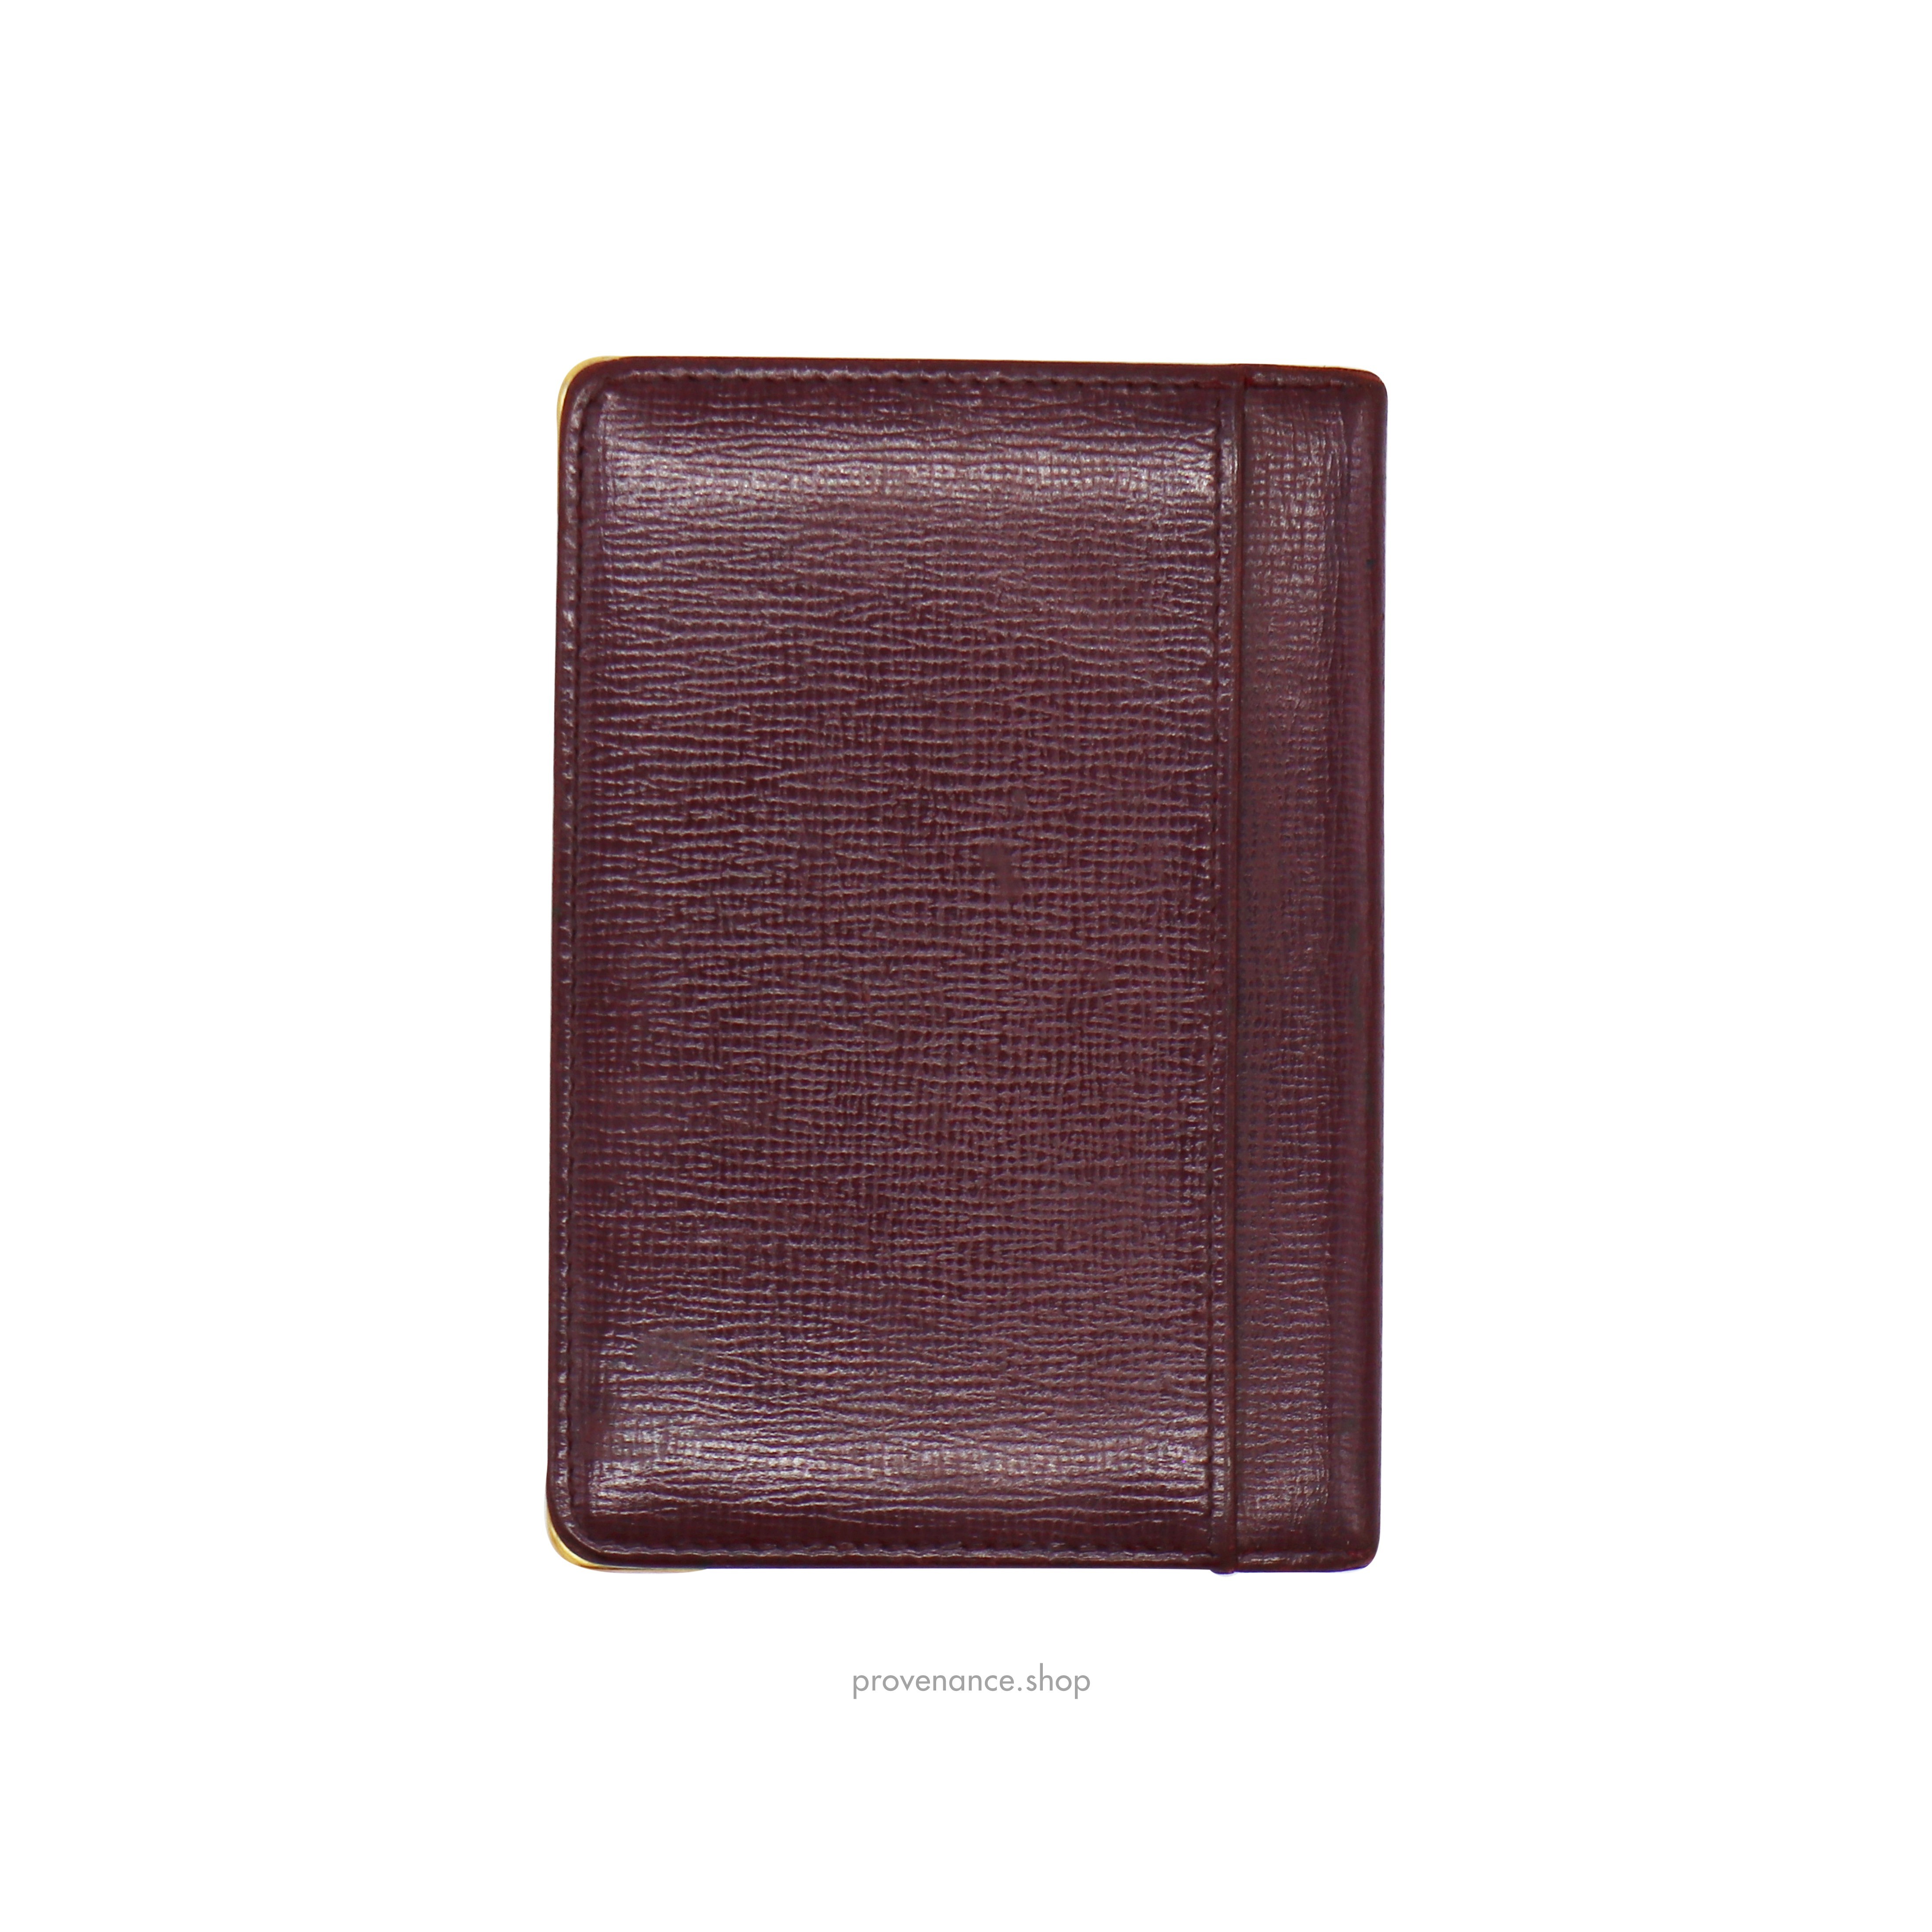 Cartier Pocket Organizer Wallet - Burgundy Leather - 2